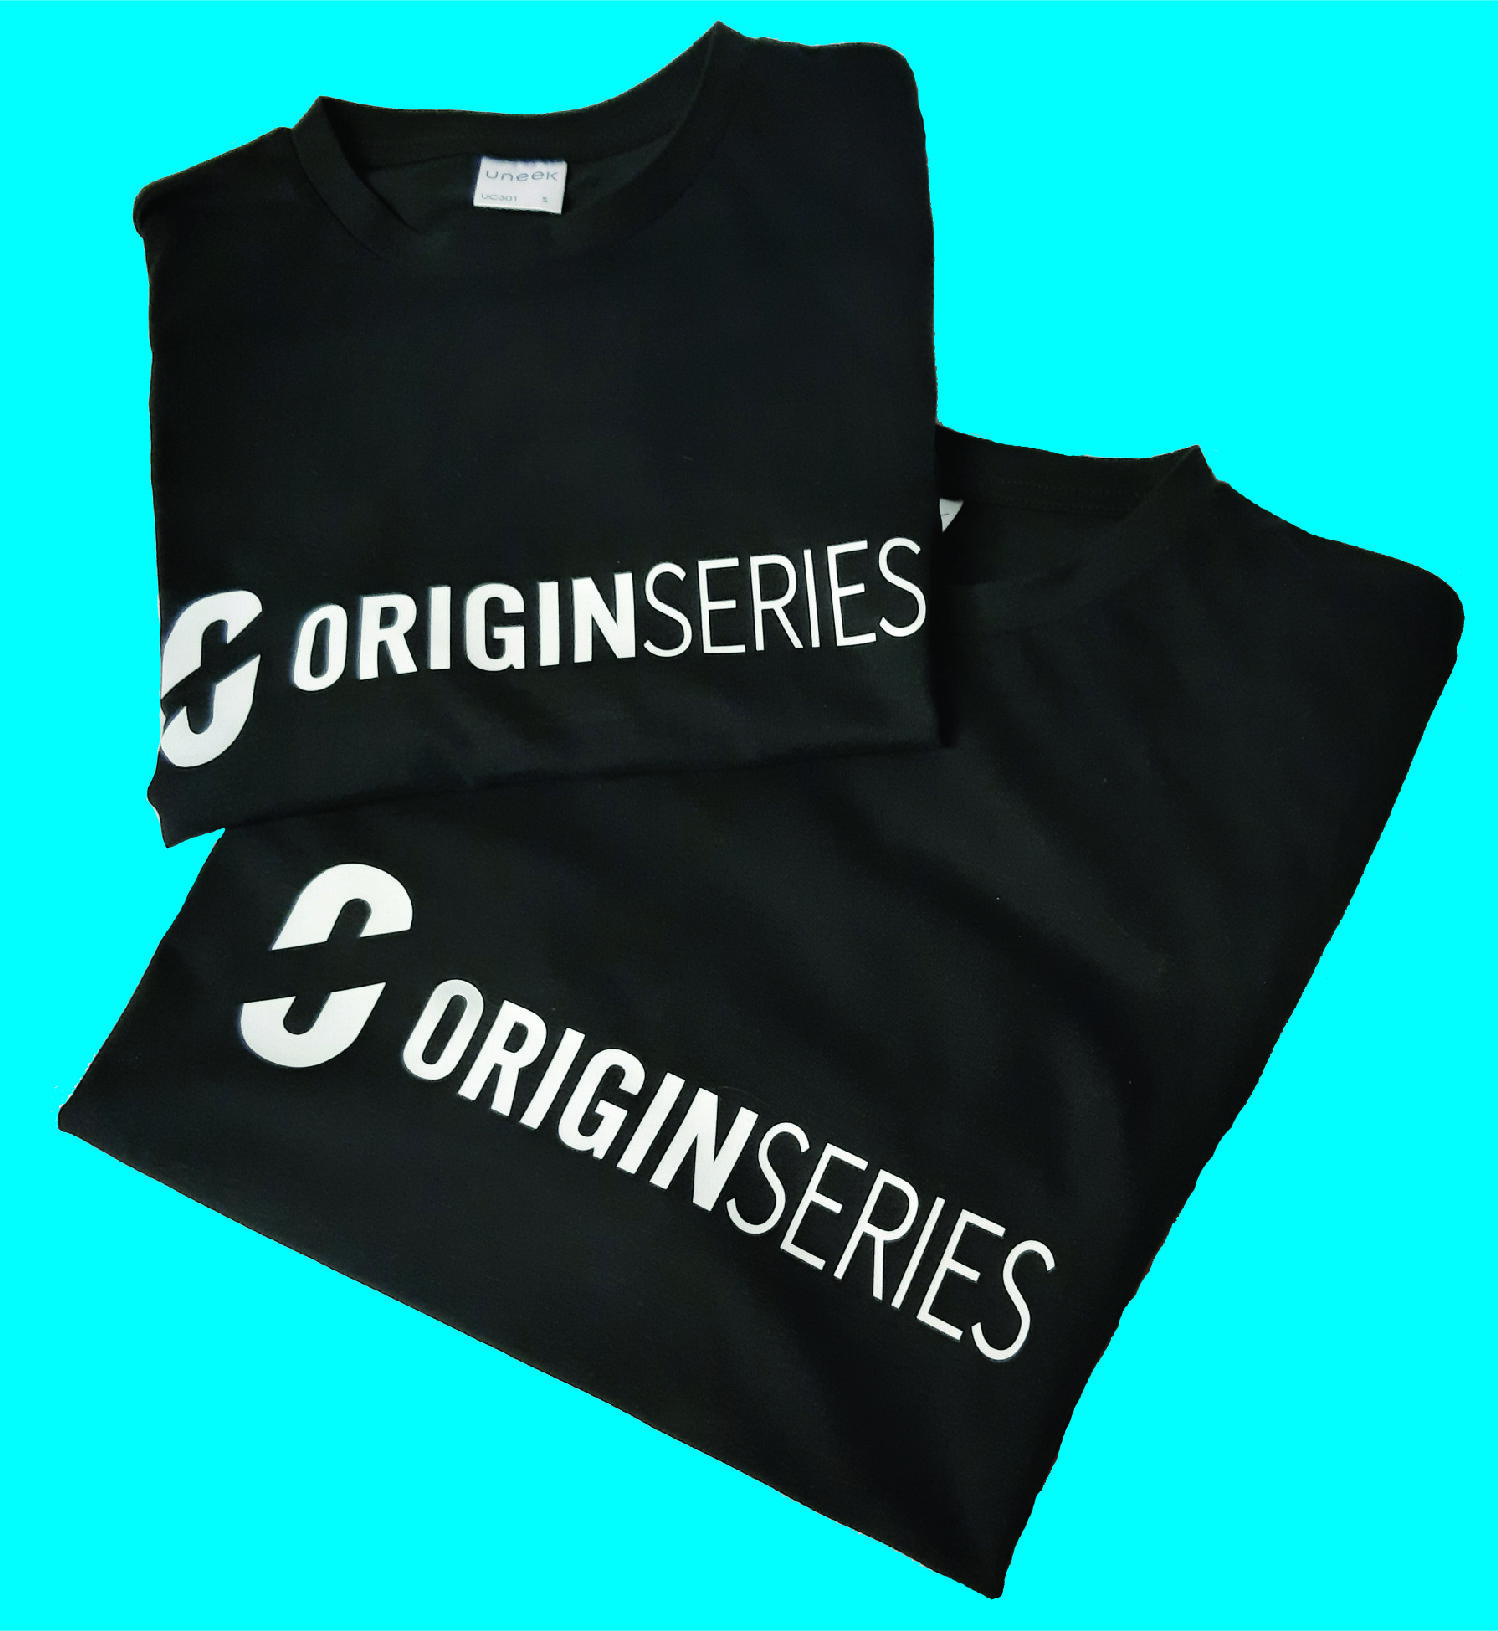 Origin series t-shirt.jpg